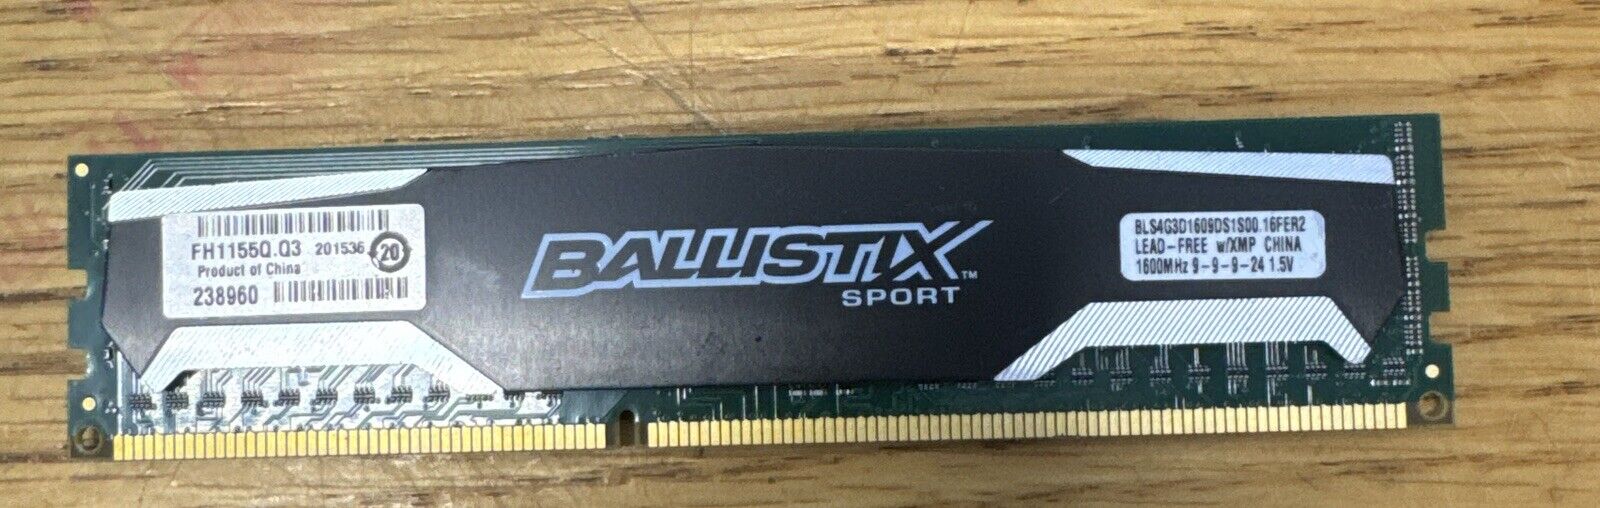 Crucial Ballistix BLS4G3D1609DS1S00 16FER2 4GB PC3-12800 Gaming Memory RAM DIMM